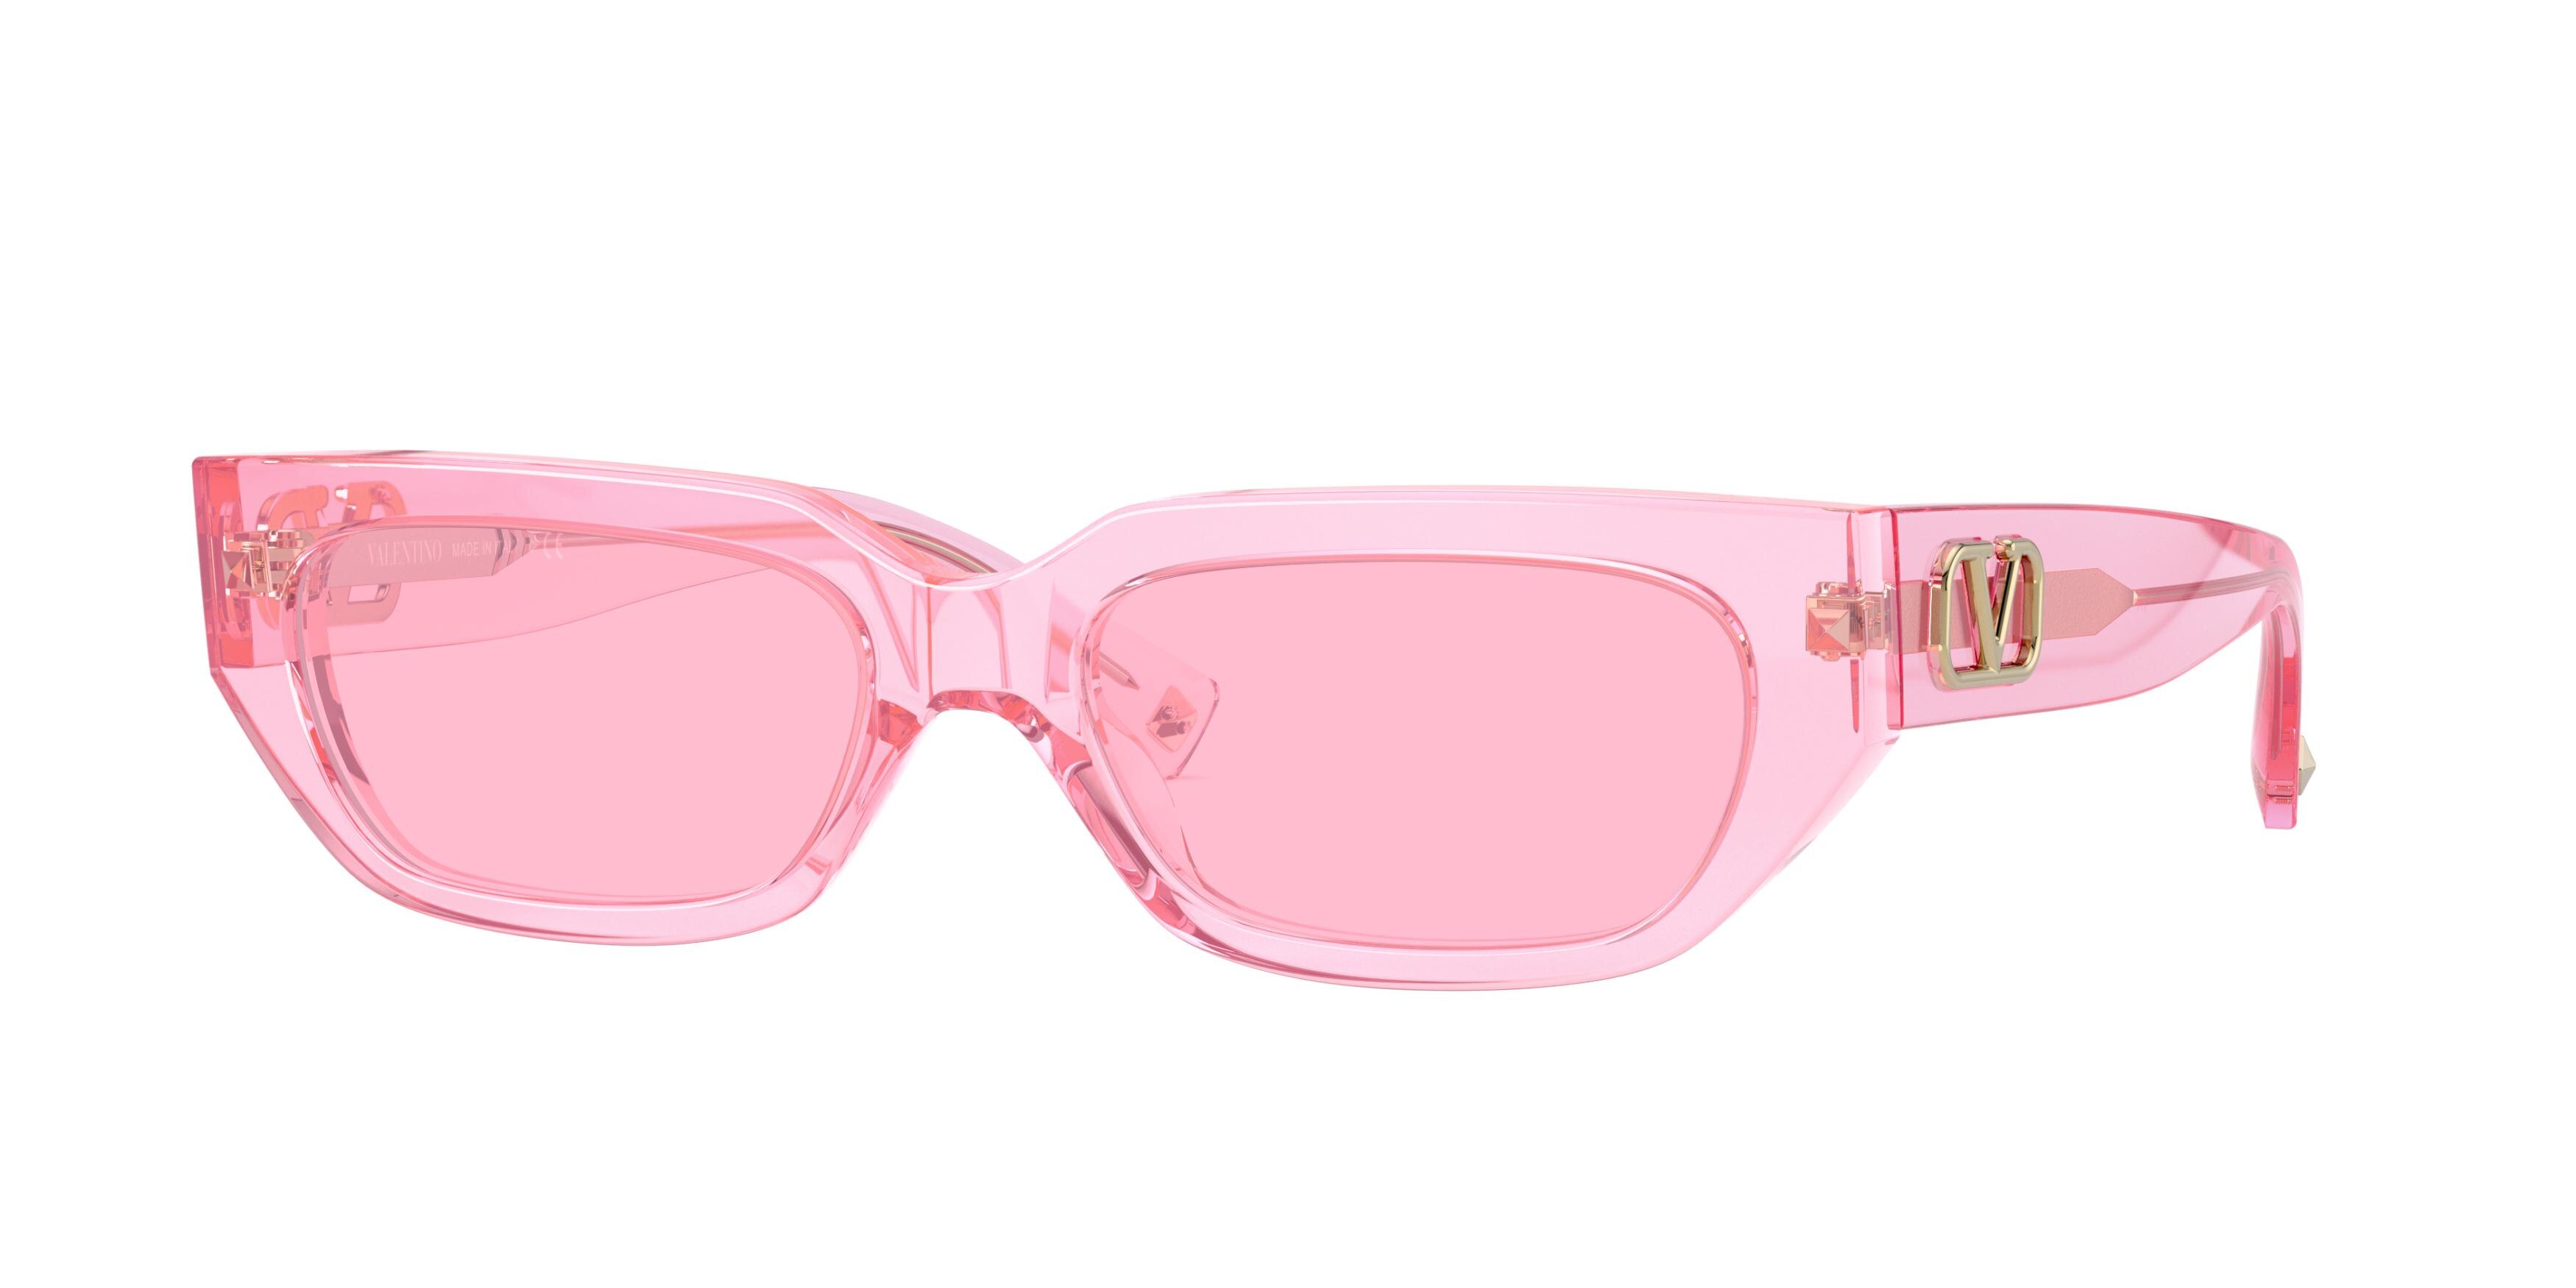  pink fluo/pink fluo trasparent